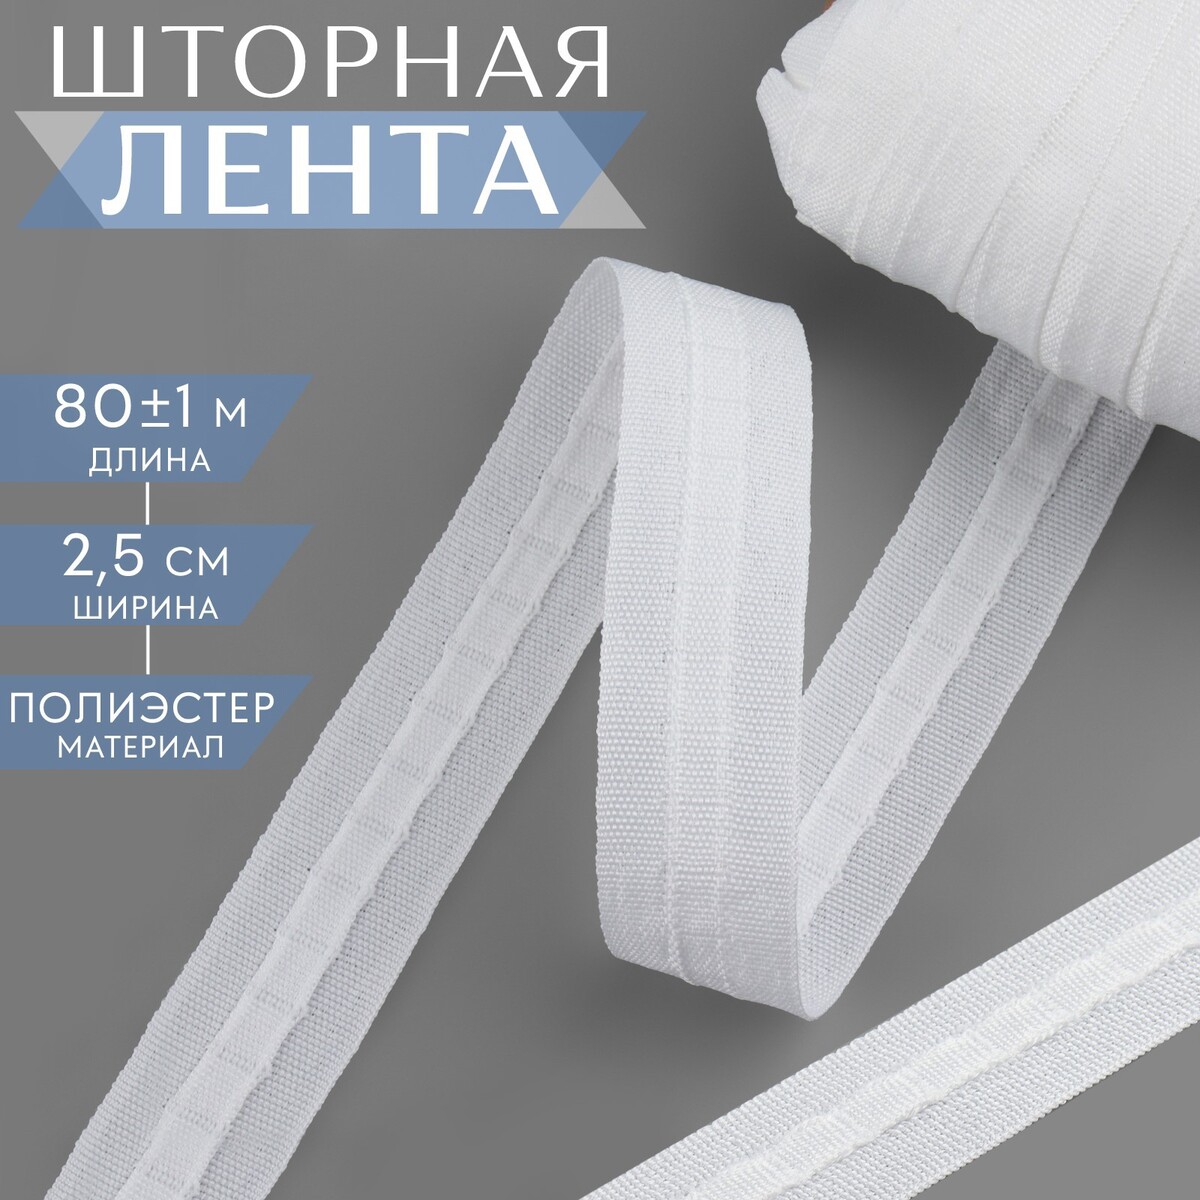 Шторная лента фиксированная сборка, матовая, 2,5 см, 80 ± 1 м, цвет белый шторная лента классическая матовая 4 см 100 ± 1 м белый